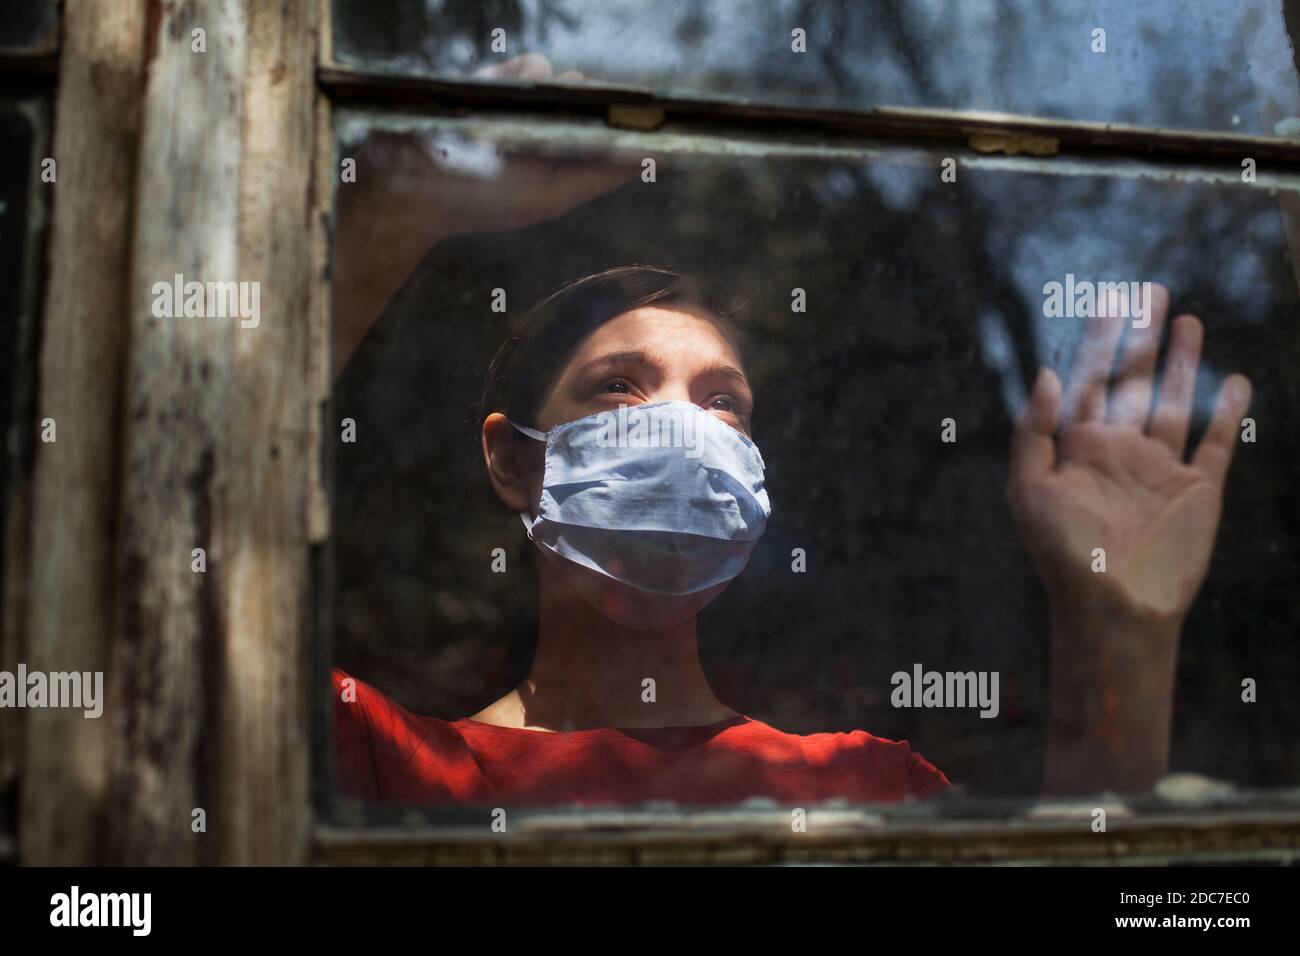 Sad depressed anxious young woman wearing protective medical mask looking outside the window, Coronavirus Covid-19 virus disease pandemic Stock Photo